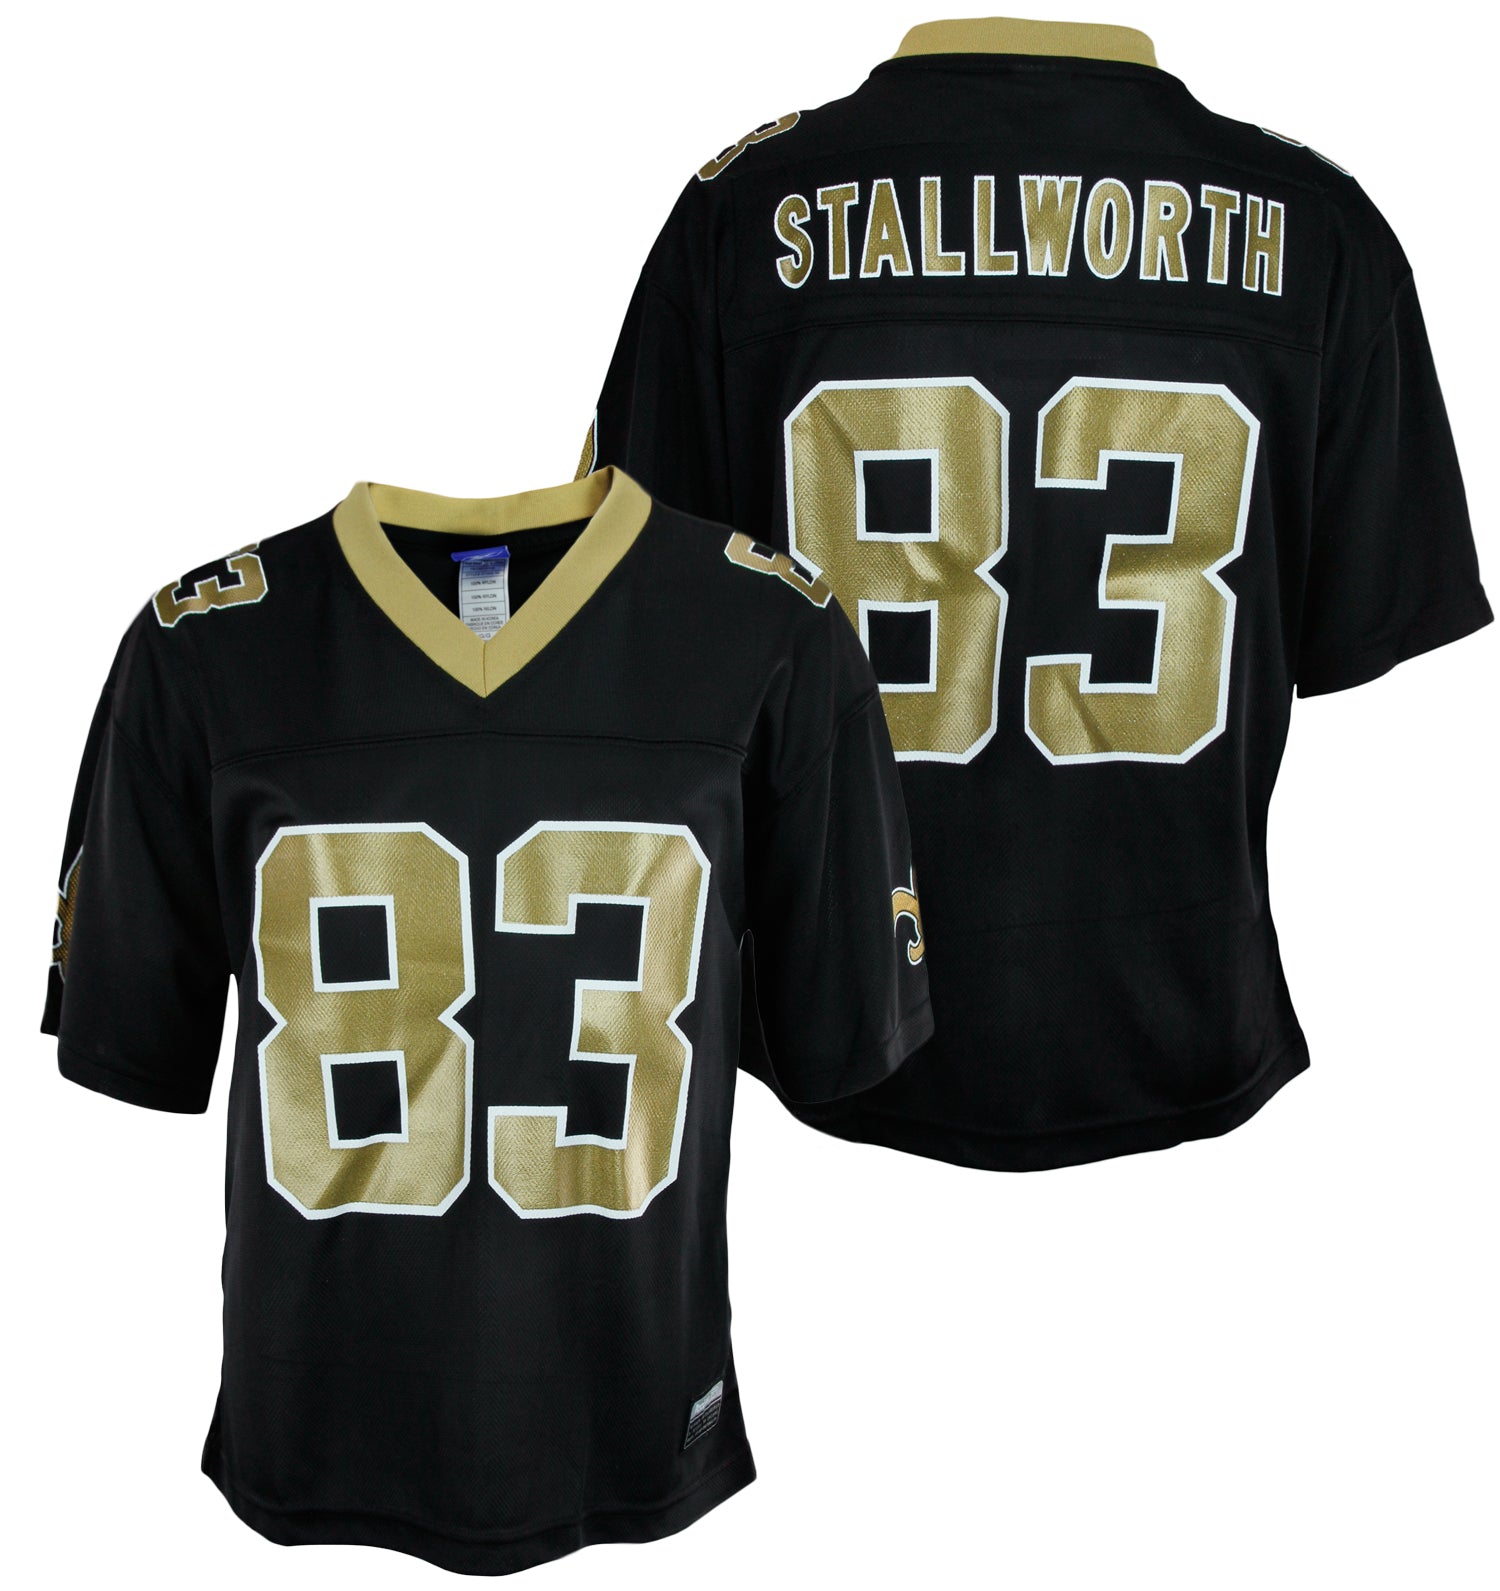 Reebok NFL Women's New Orleans Saints Donte Stallworth Fashion